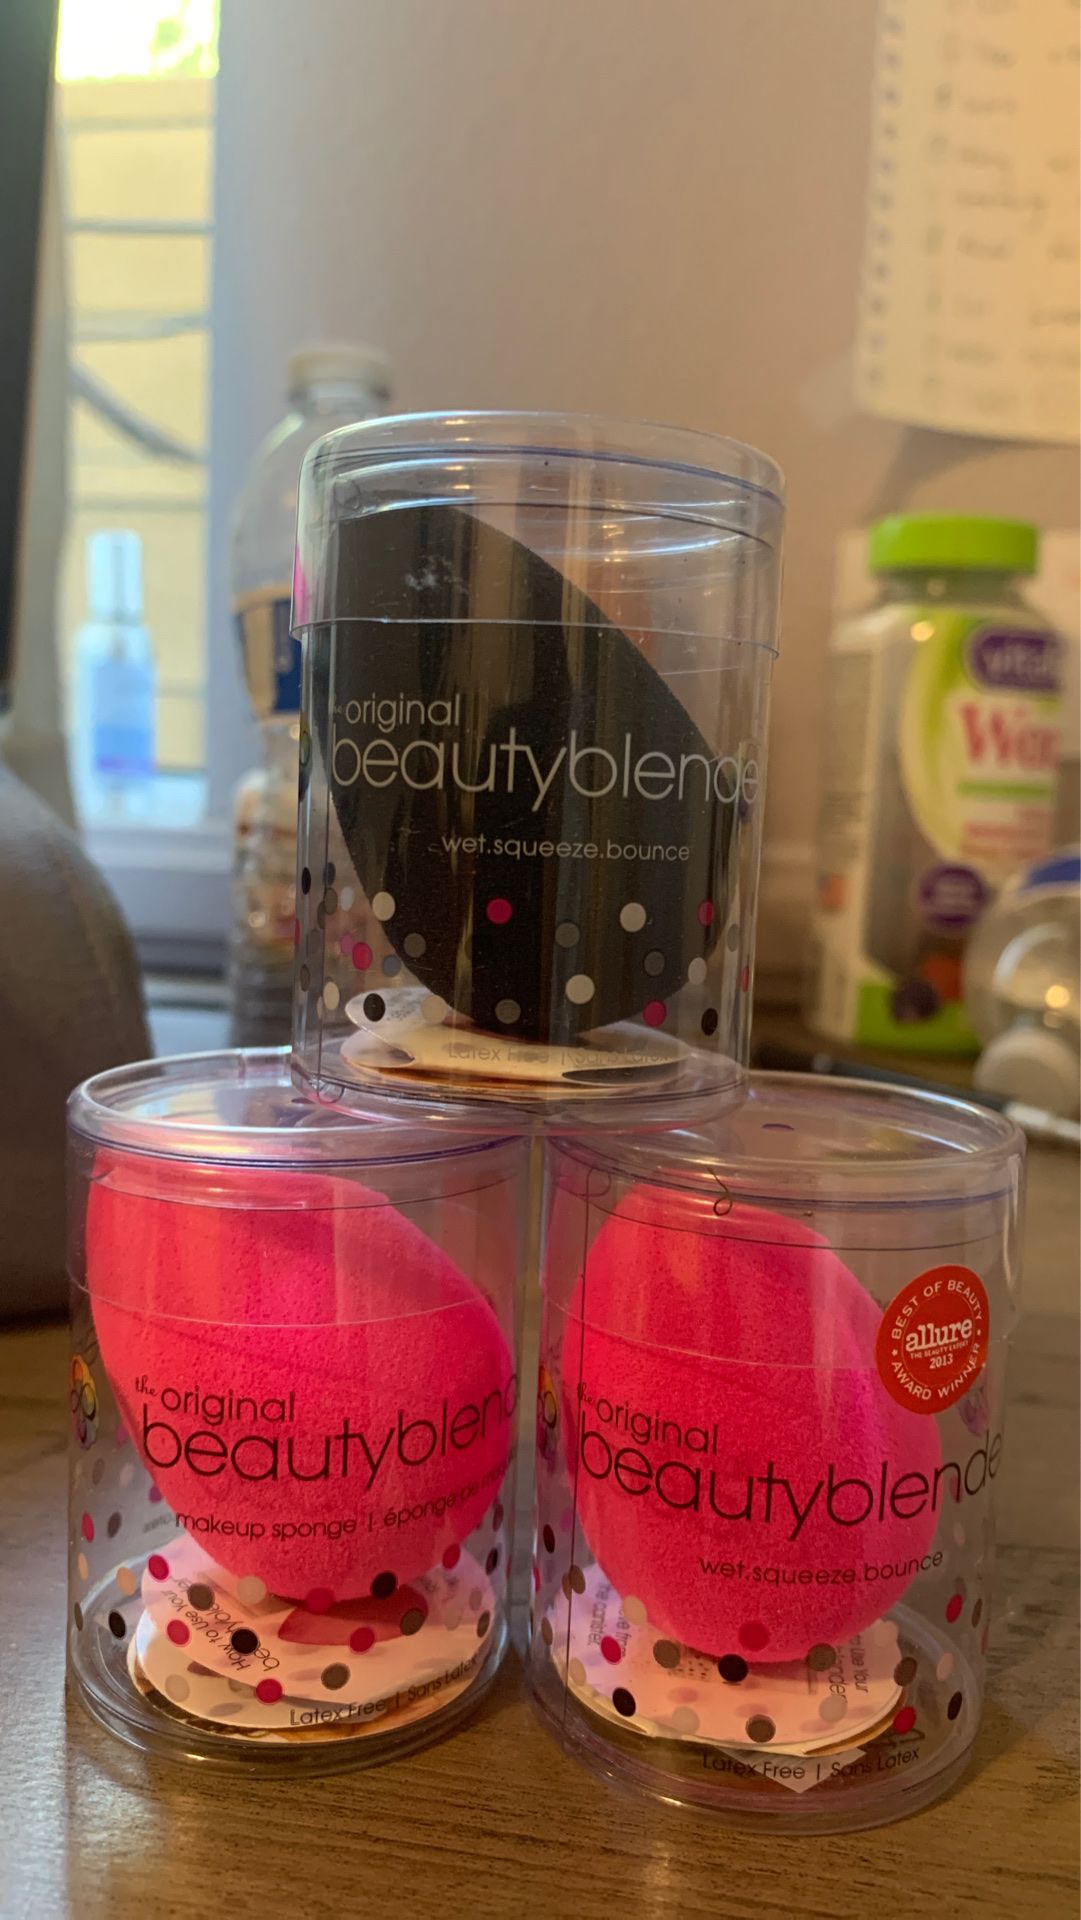 Brand new beauty blender batch of 3